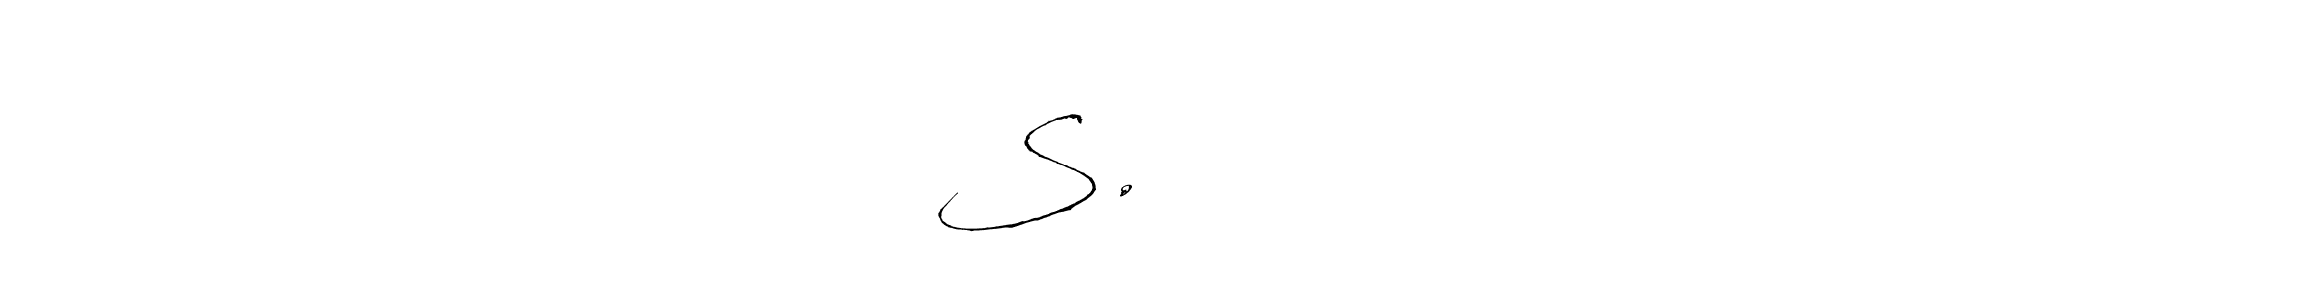 S.பாஸ்கர் stylish signature style. Best Handwritten Sign (Antro_Vectra) for my name. Handwritten Signature Collection Ideas for my name S.பாஸ்கர். S.பாஸ்கர் signature style 6 images and pictures png